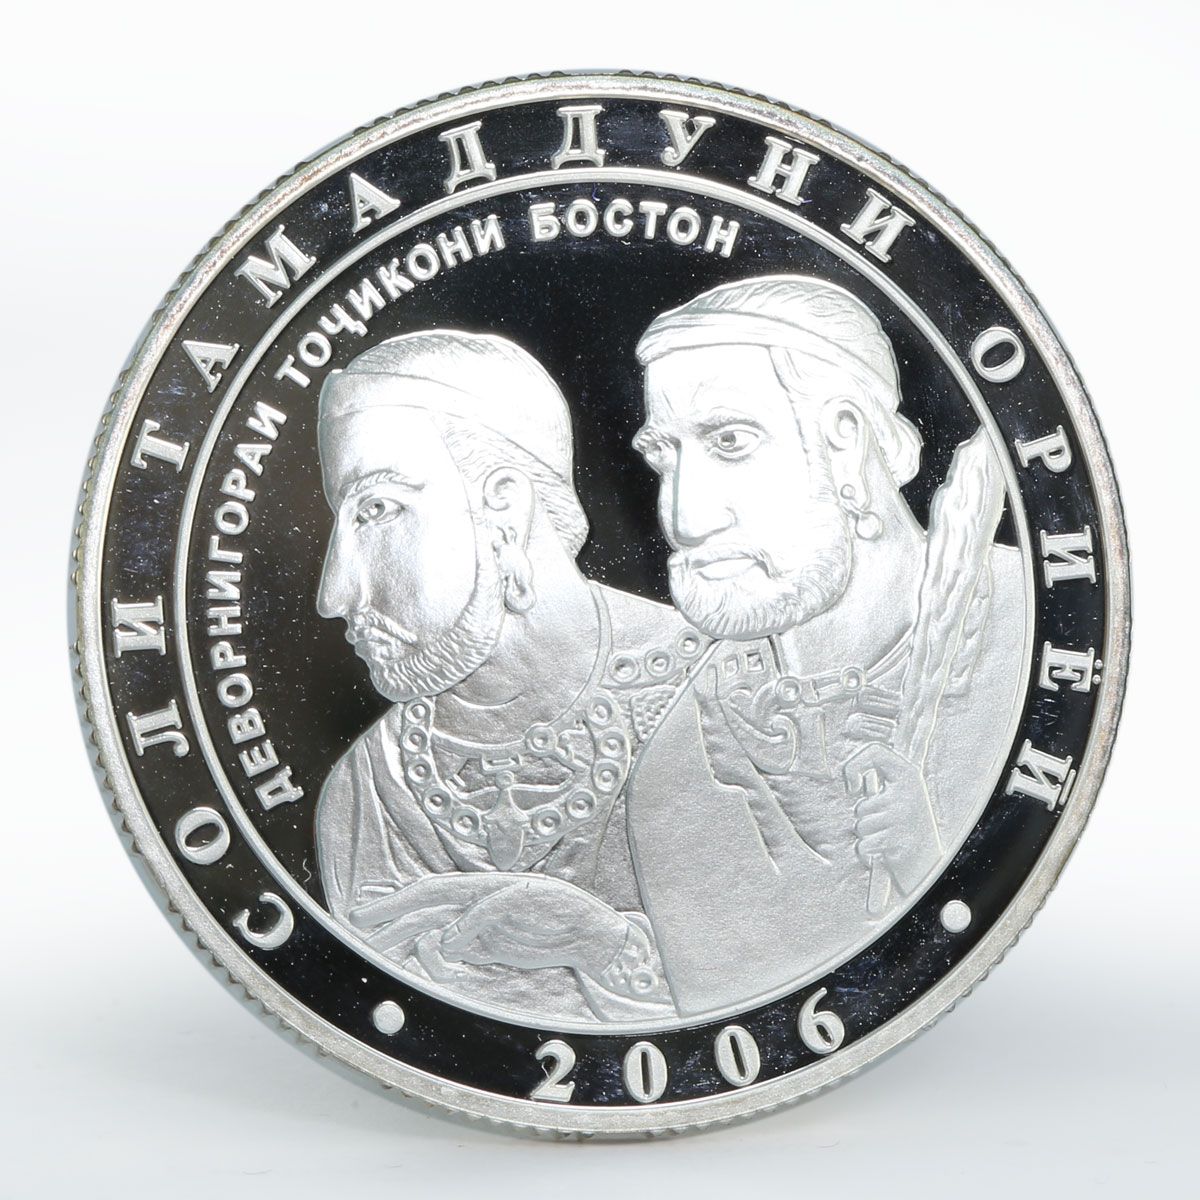 Tajikistan 1 somoni Year of Aryan Civilization proof silver coin 2006